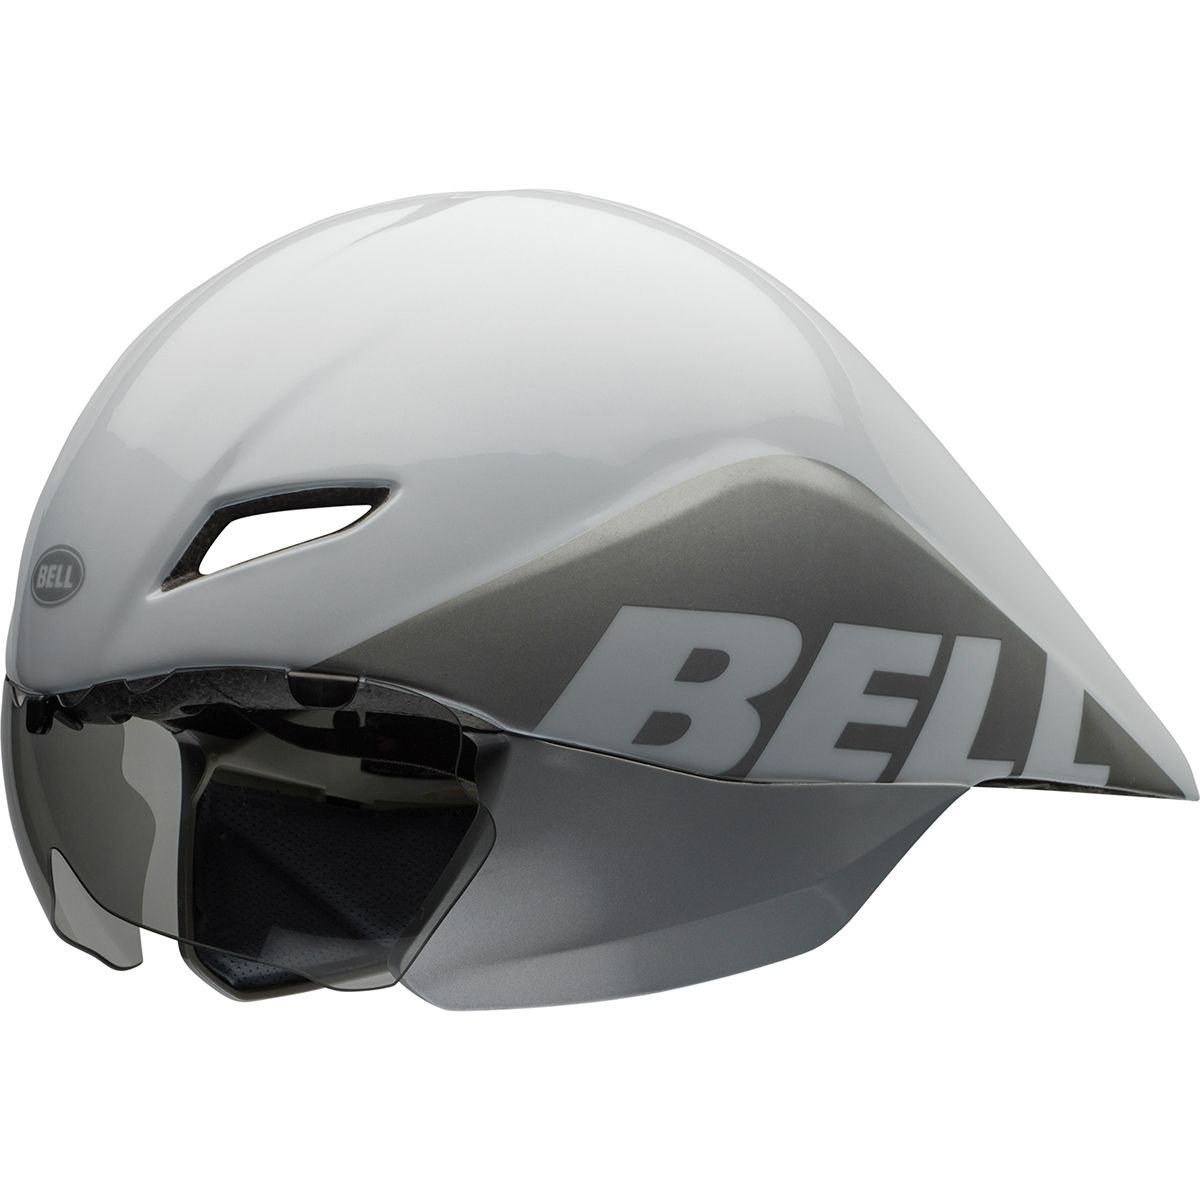 Bell Javelin Helmet Men's